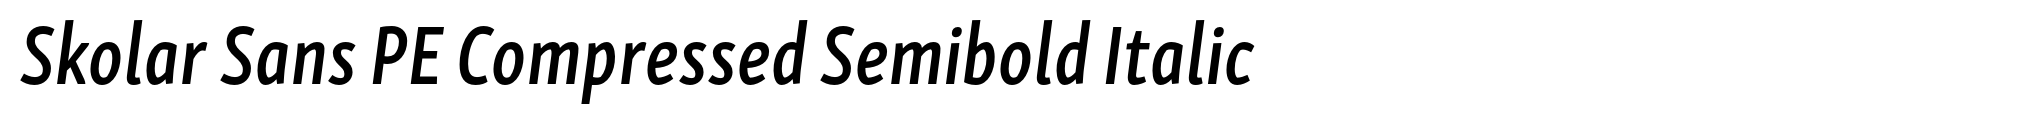 Skolar Sans PE Compressed Semibold Italic image